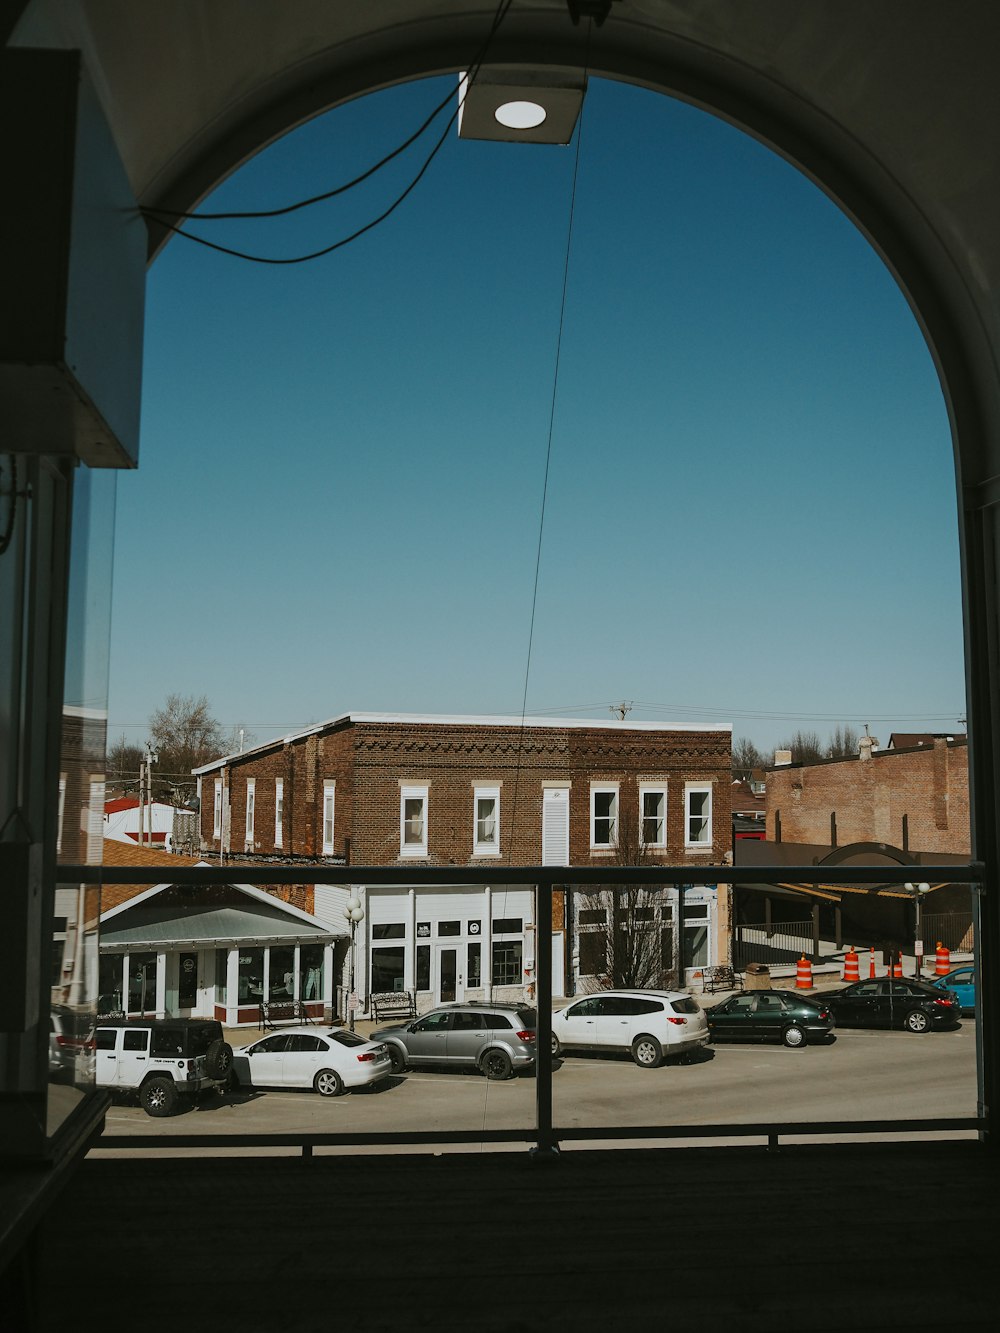 a view of a street through a window